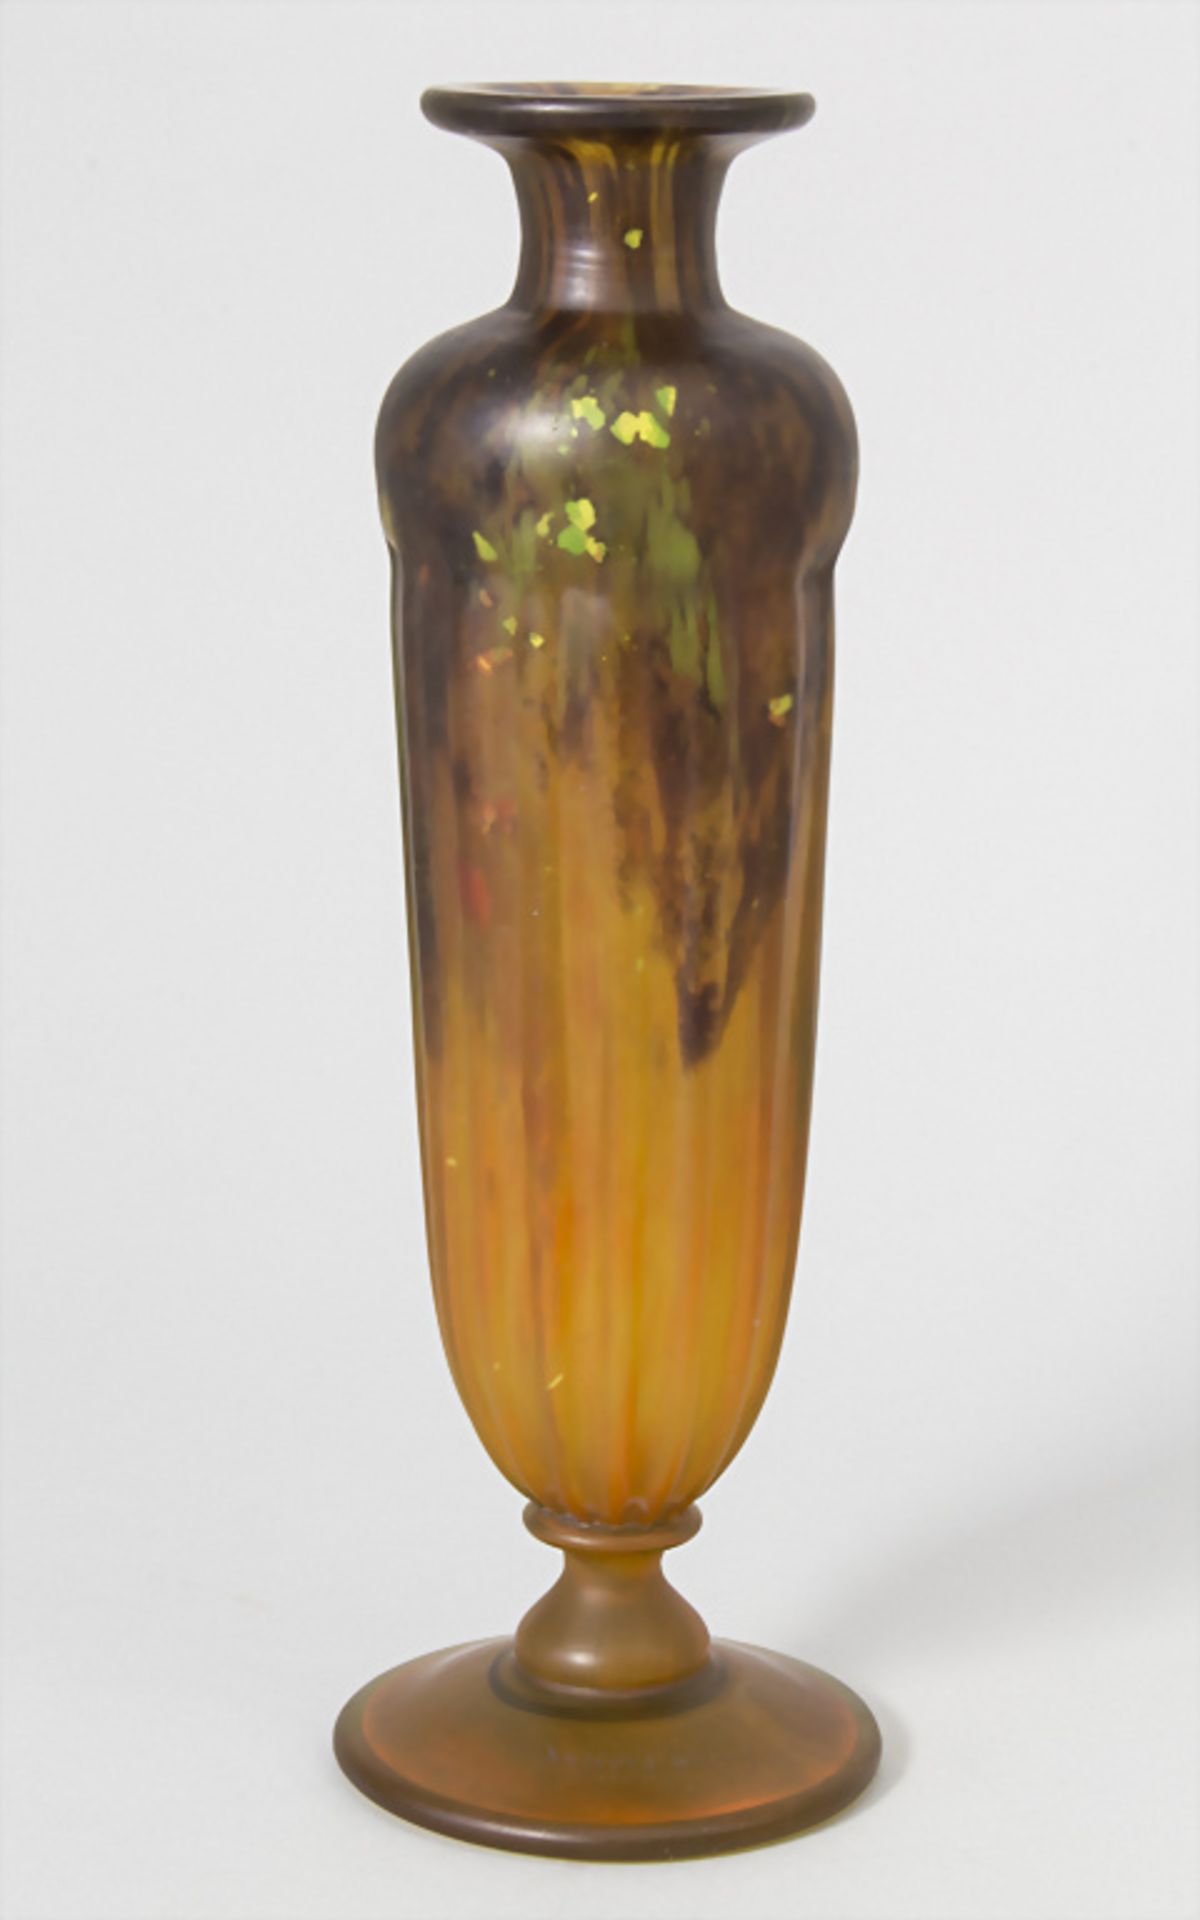 Jugendstil Vase / Art Nouveau glass vase, Daum Frères, Ecole de Nancy, Frankreich, um 1900 - Image 2 of 7